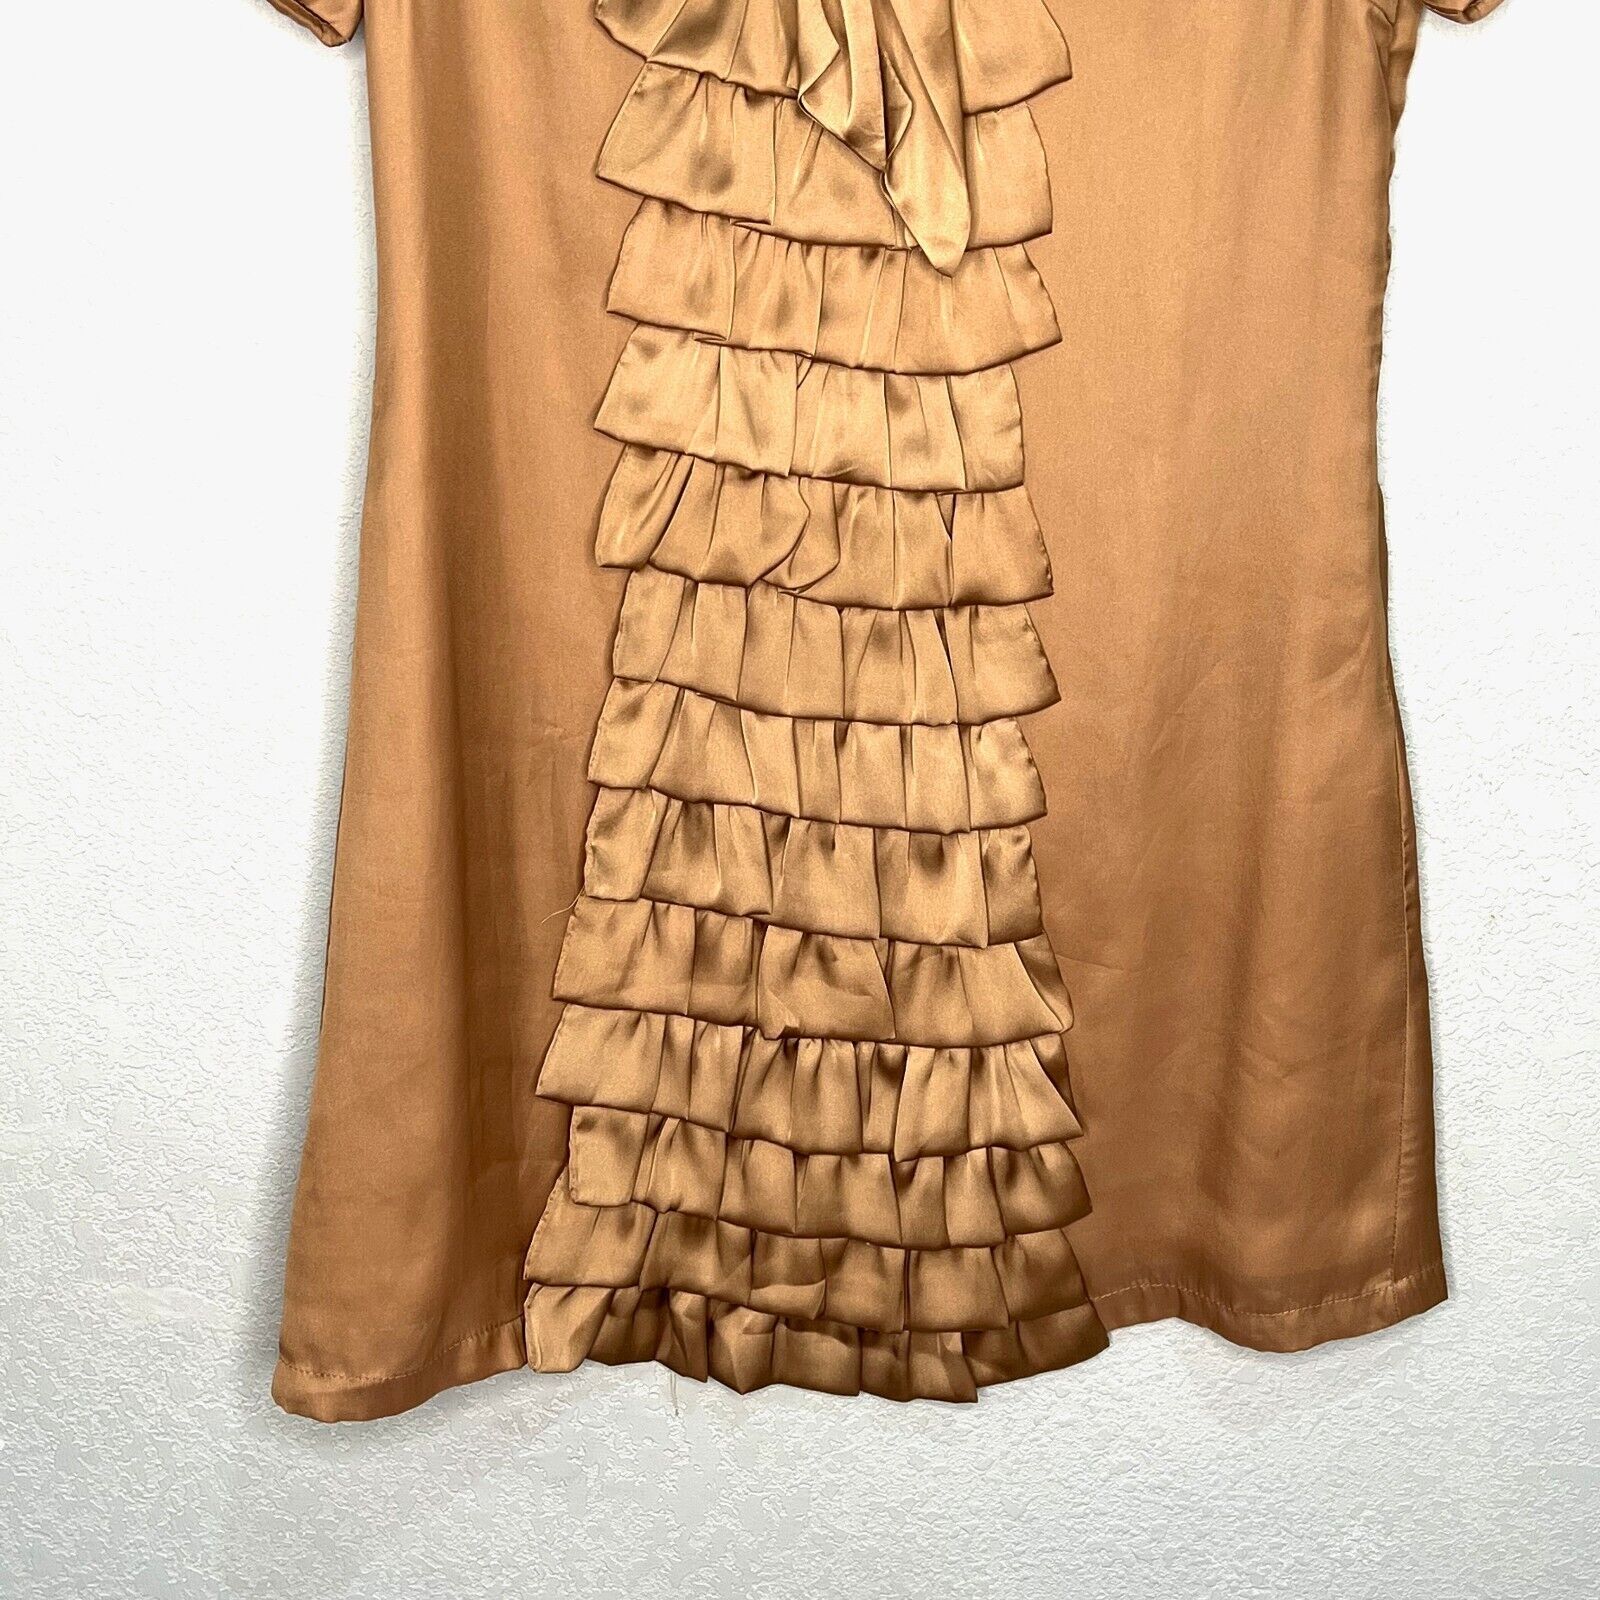 Juiceana Paris Bronze Golden Ruffle Tie Front Silk Dress Size Small